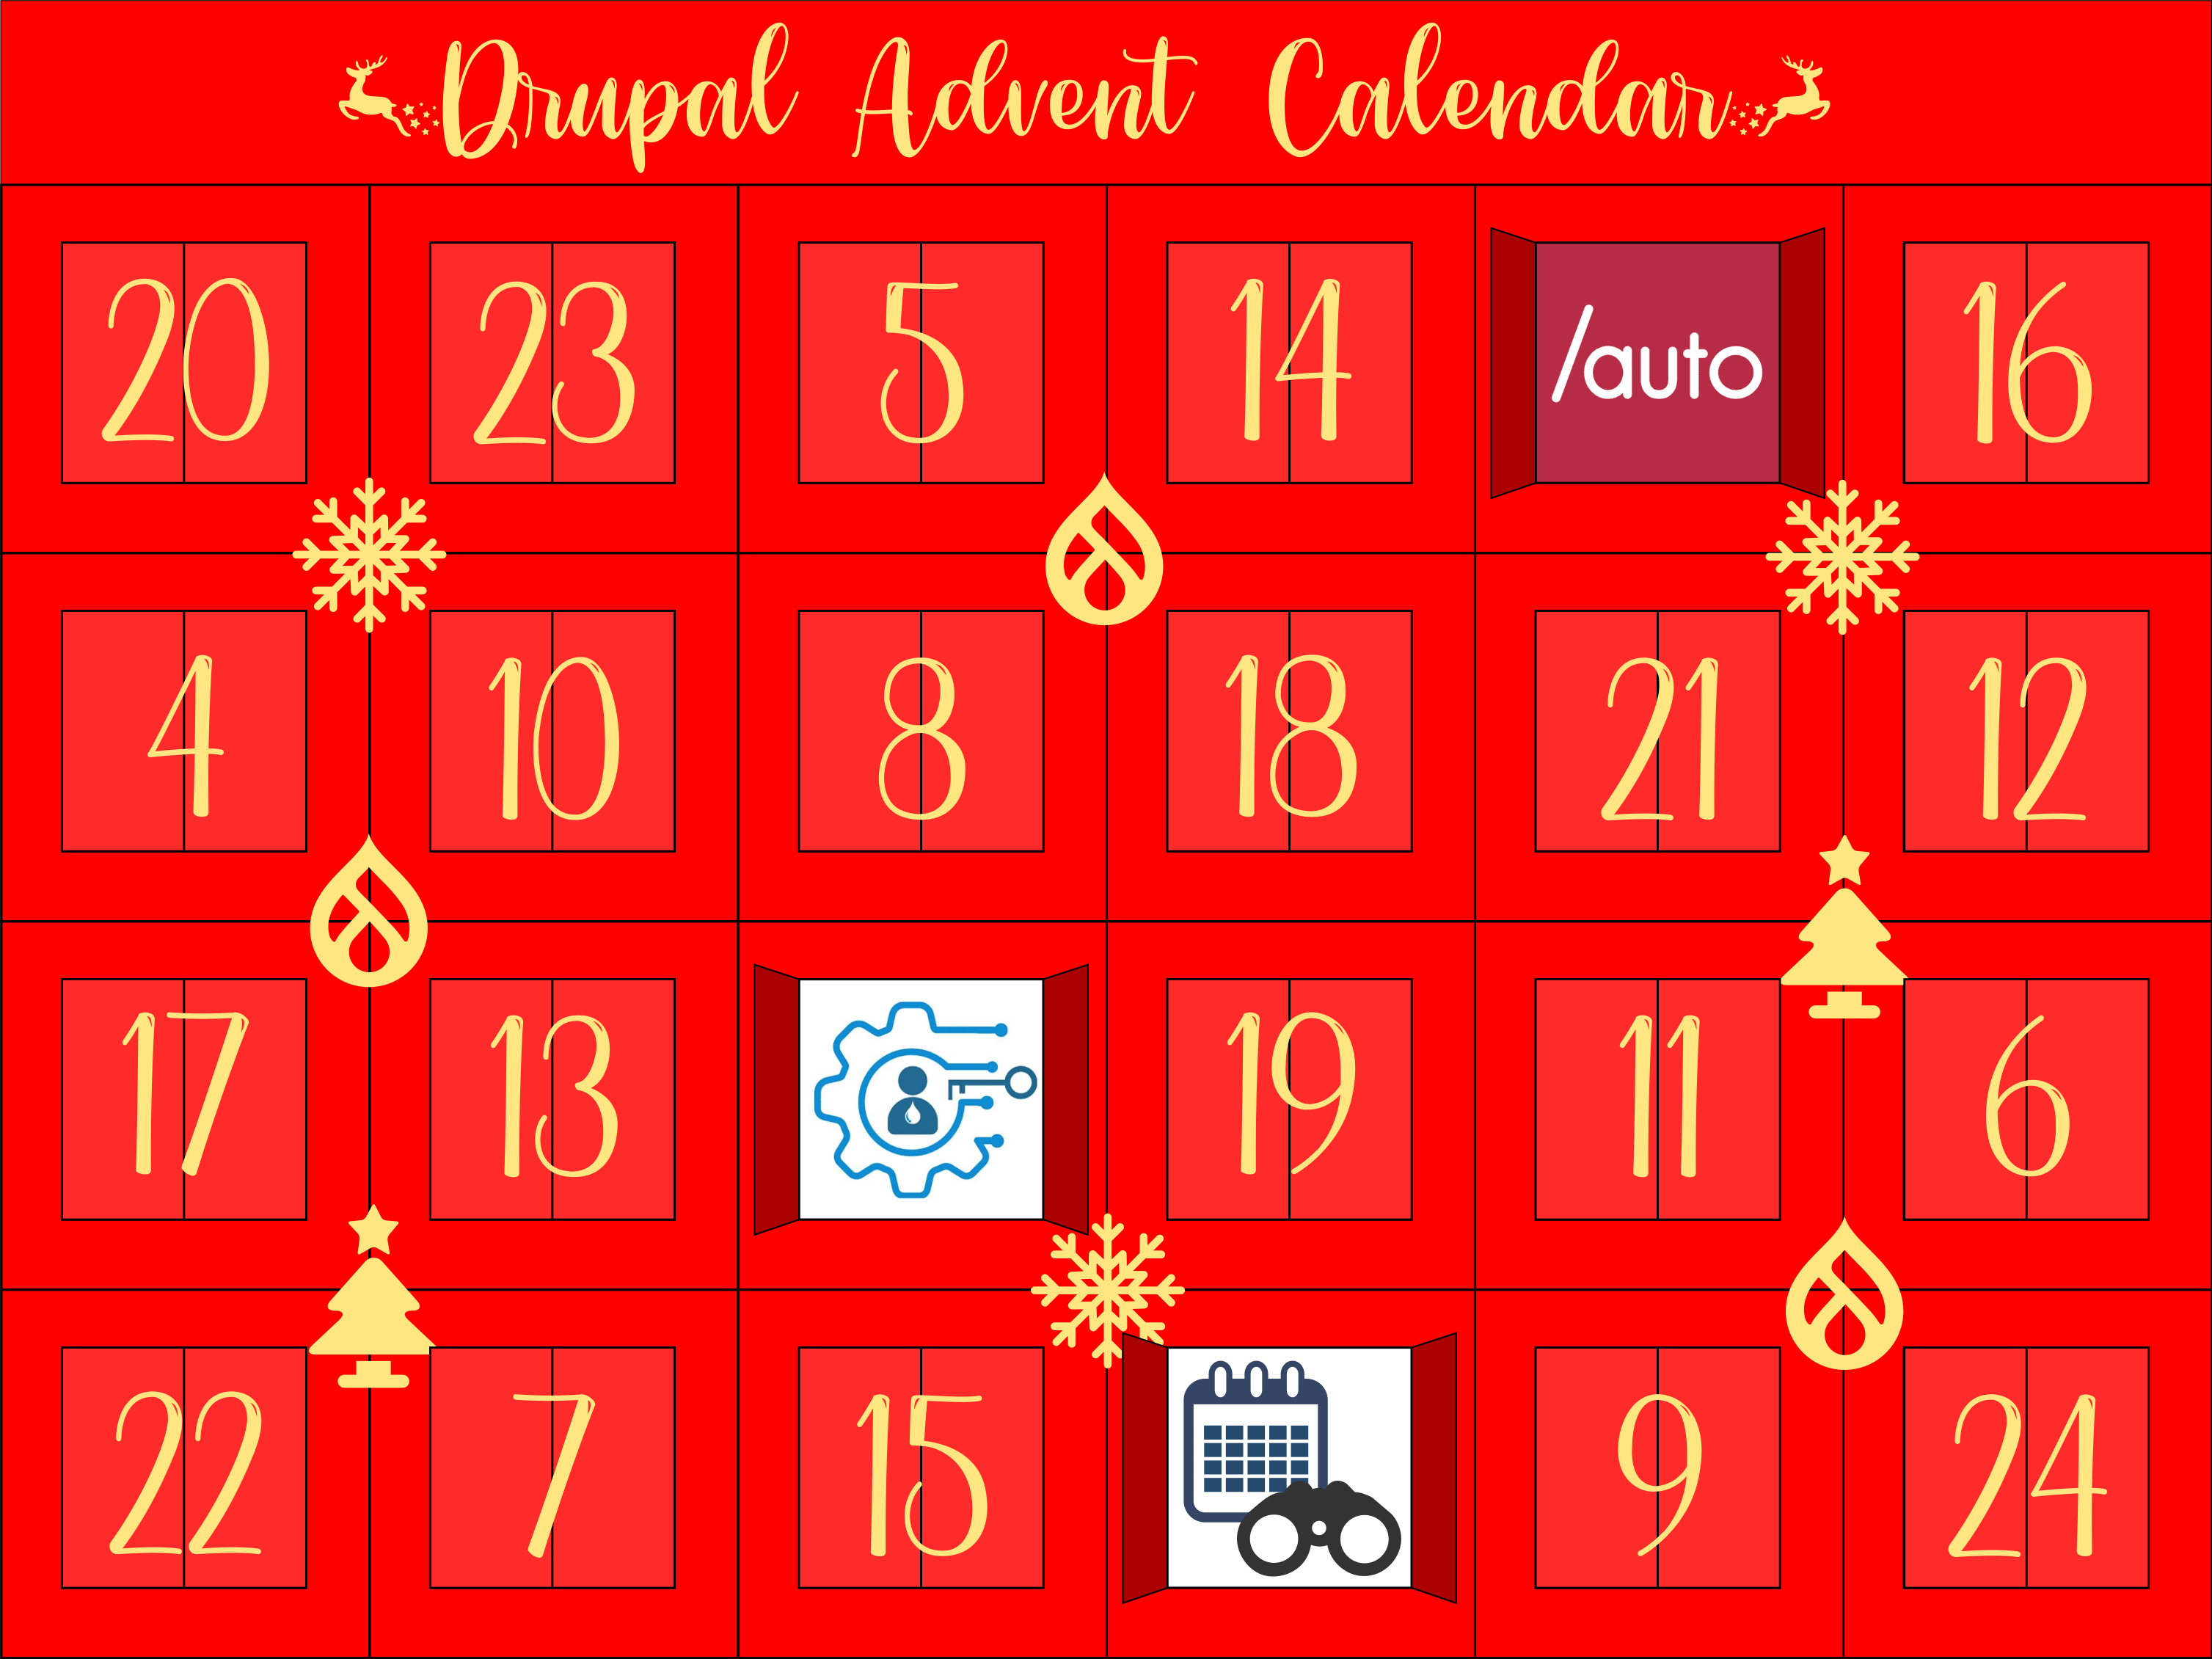 Advent calendar with door 3 open, revealing Pathauto logo